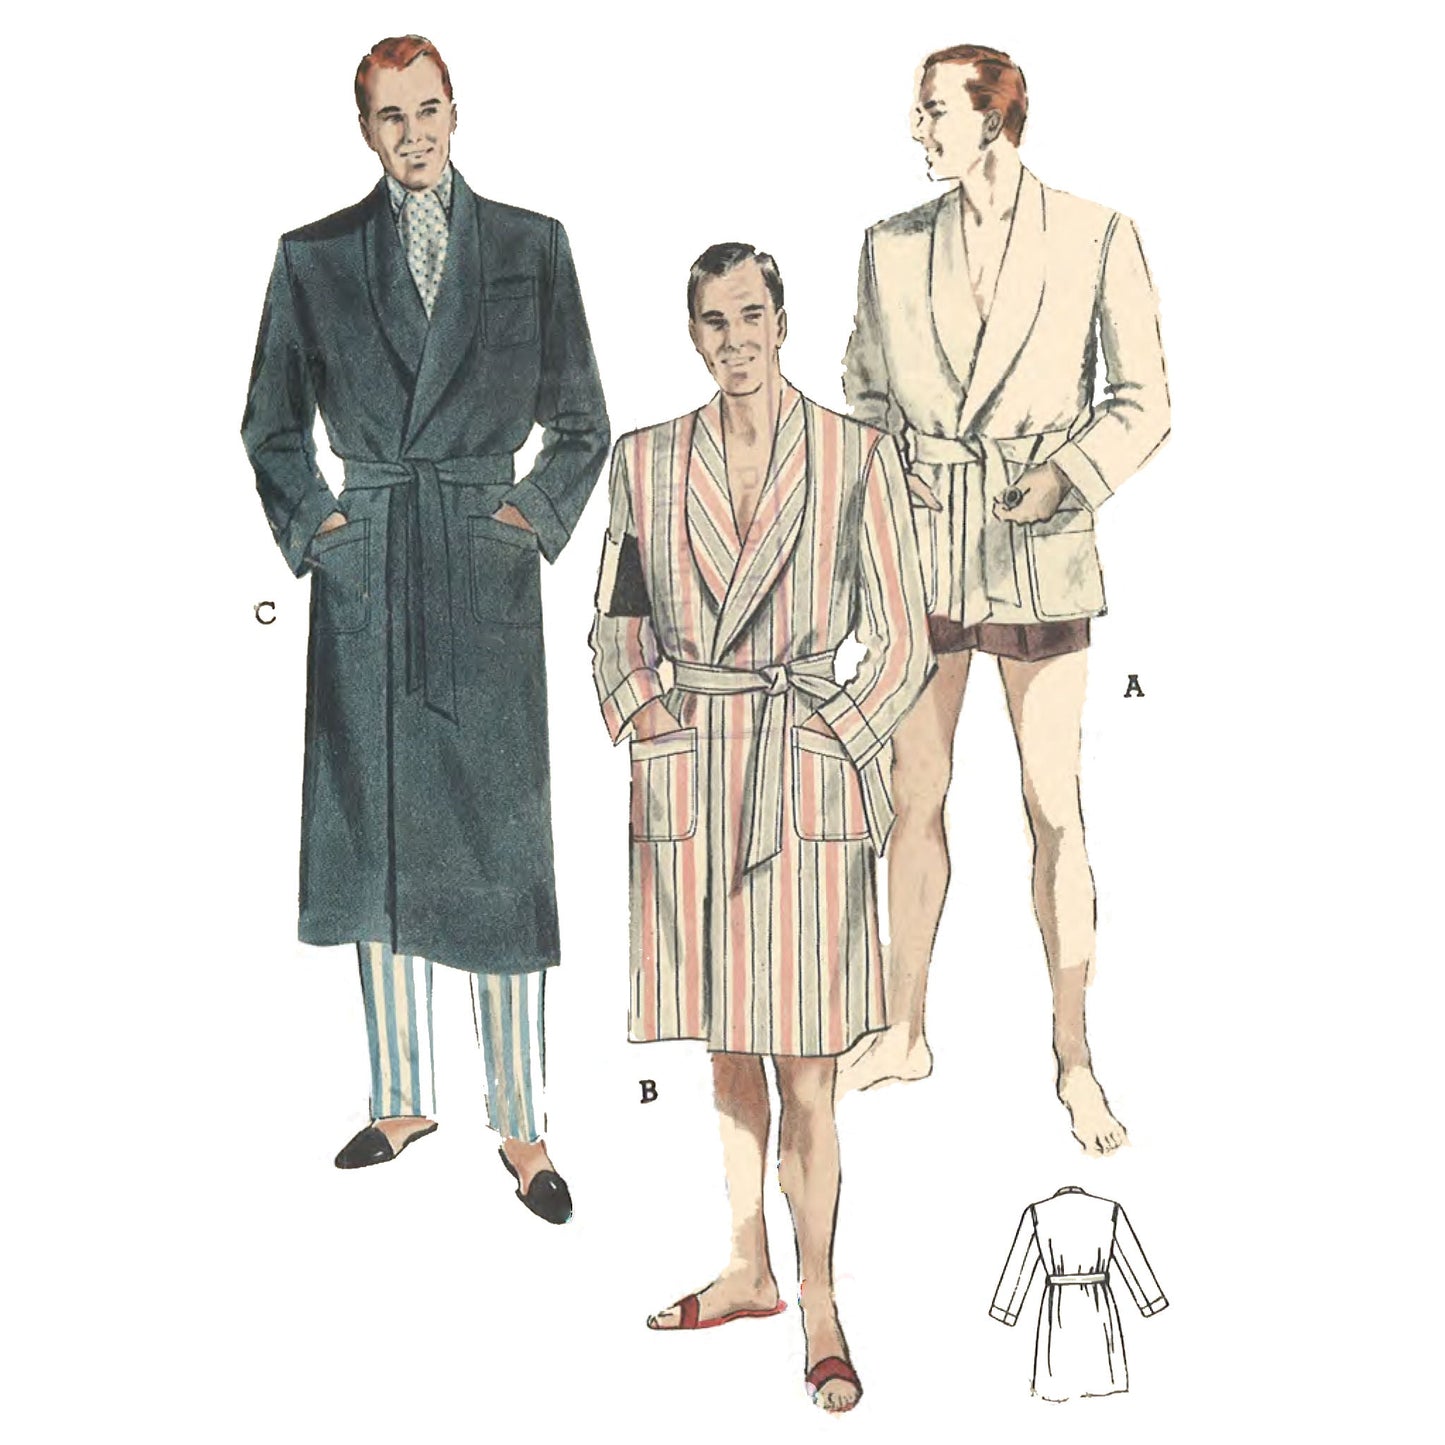 Men wearing dressing gowns